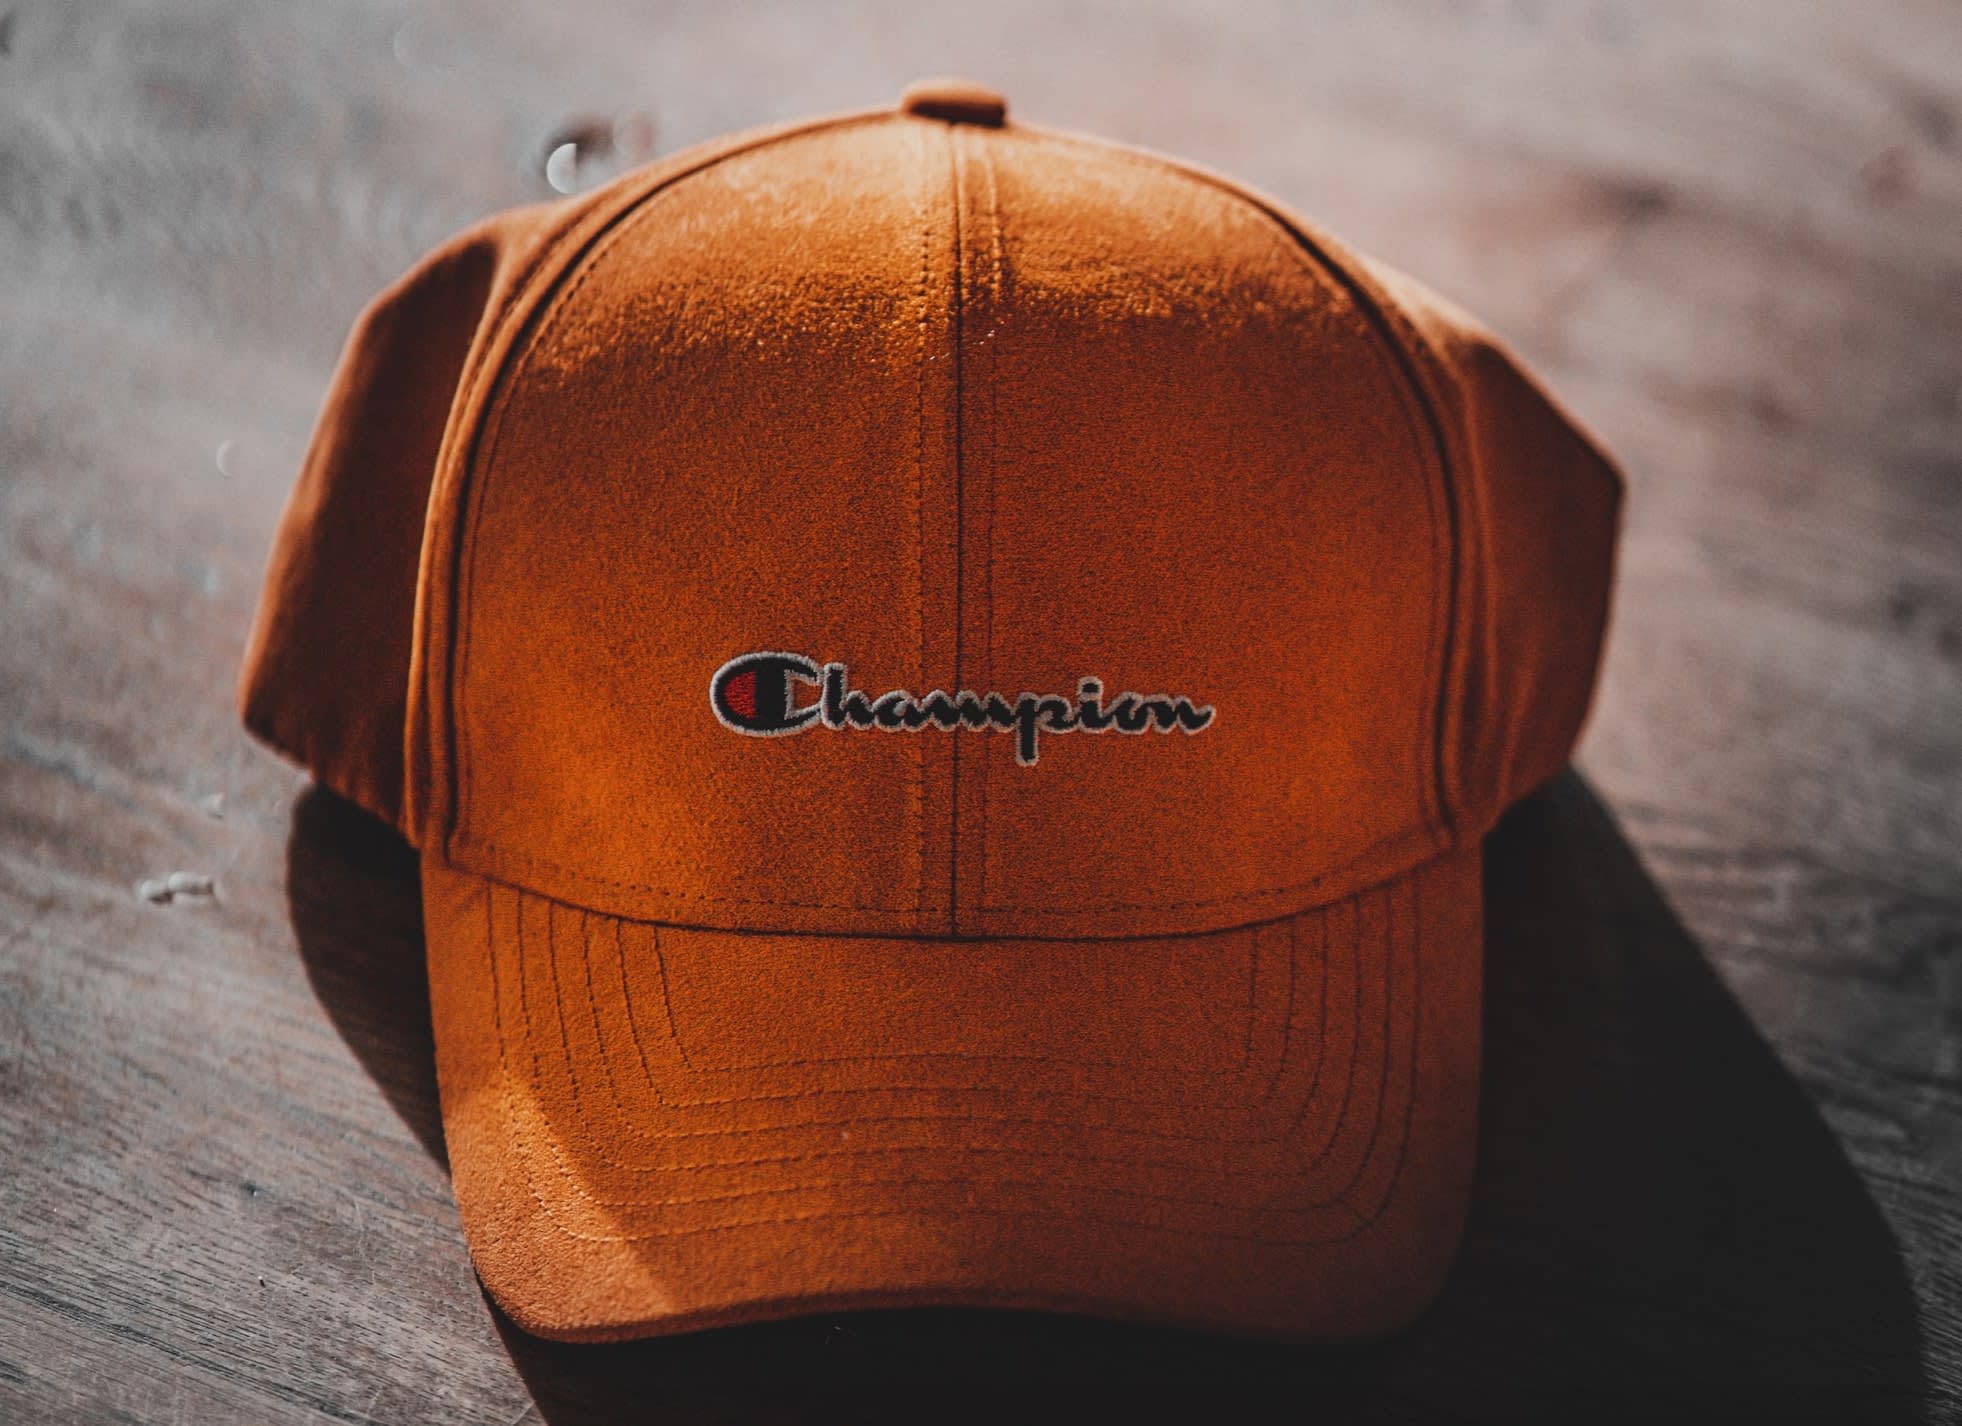 Vintage Champion baseball cap, orange